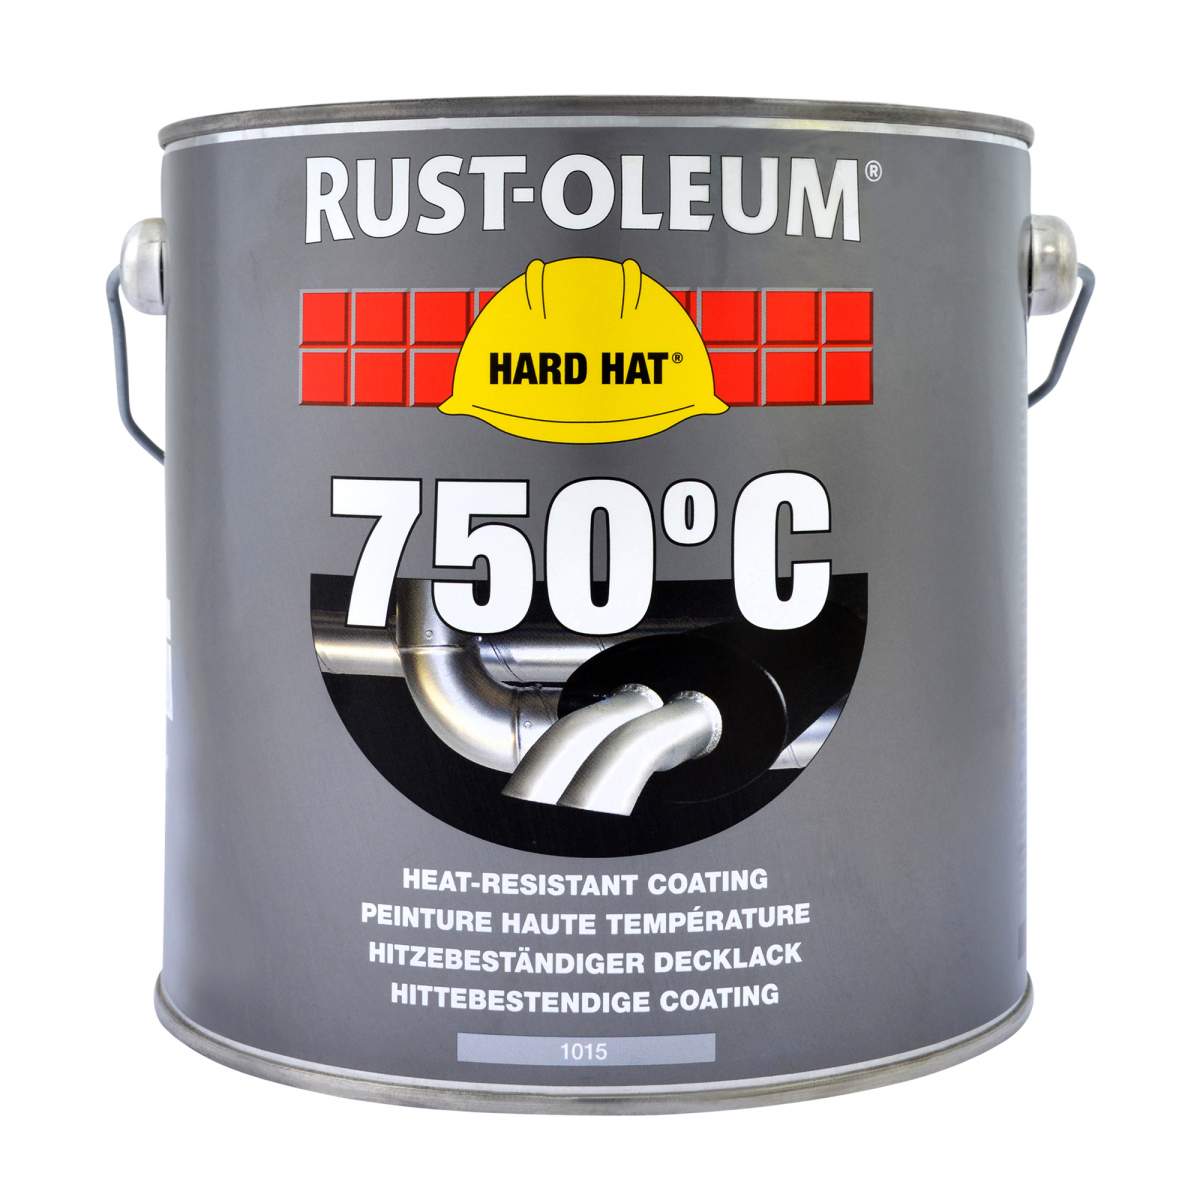 Rust-Oleum Hard Hat® Heat Resistant Paint Coating 1015 / 1078 | Up to 750°C